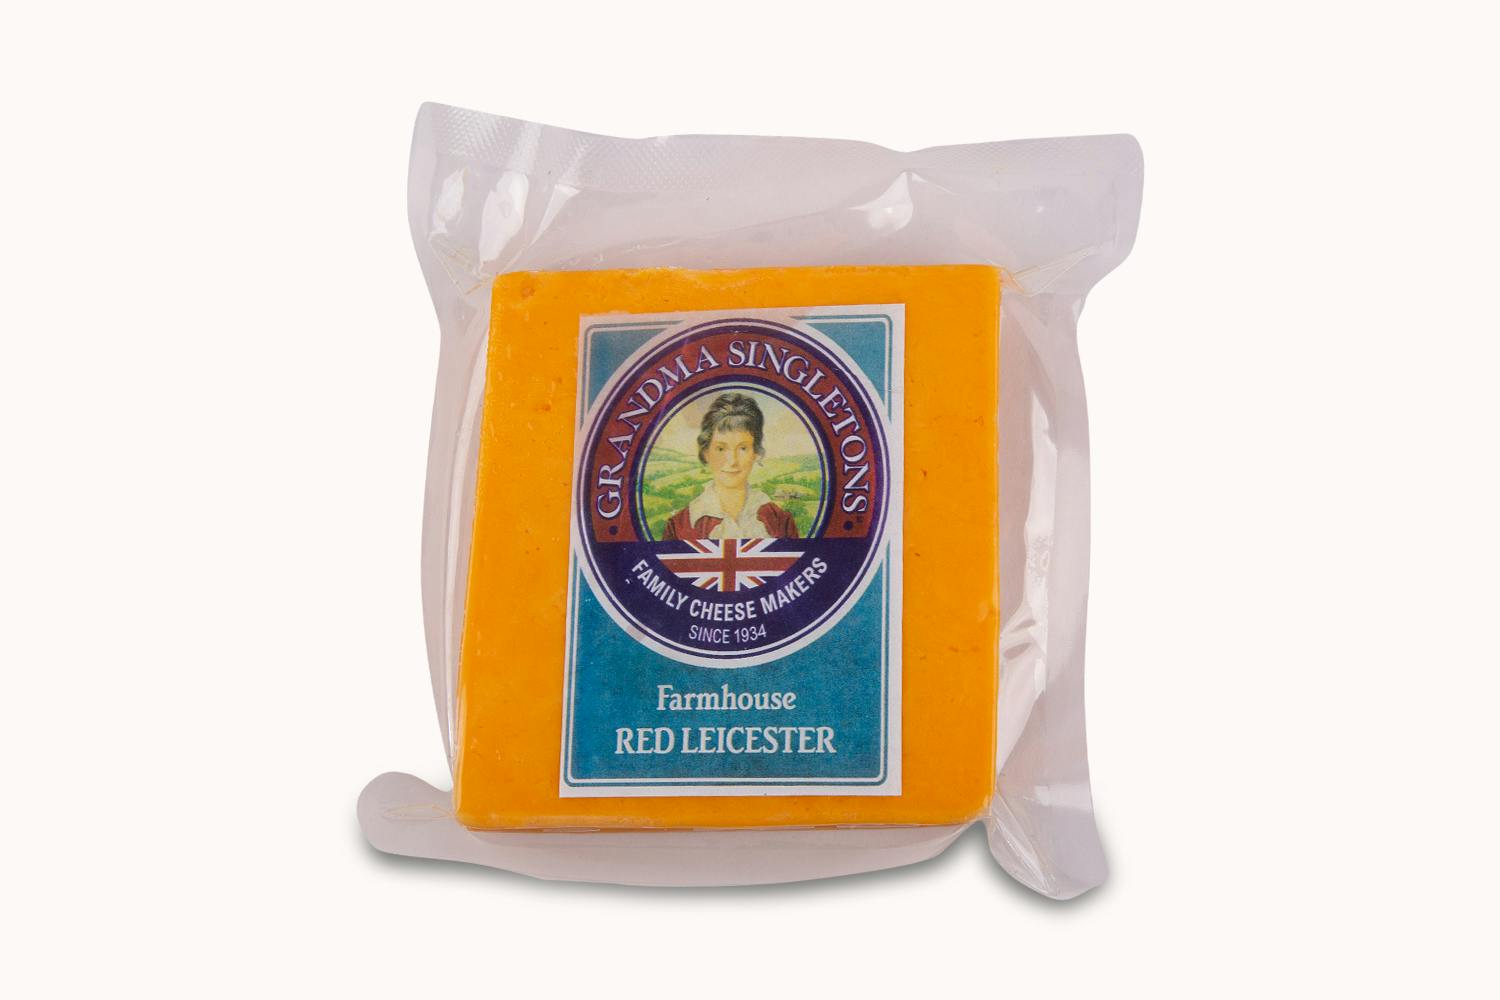 Grandma Singleton Red Leicester Cheese